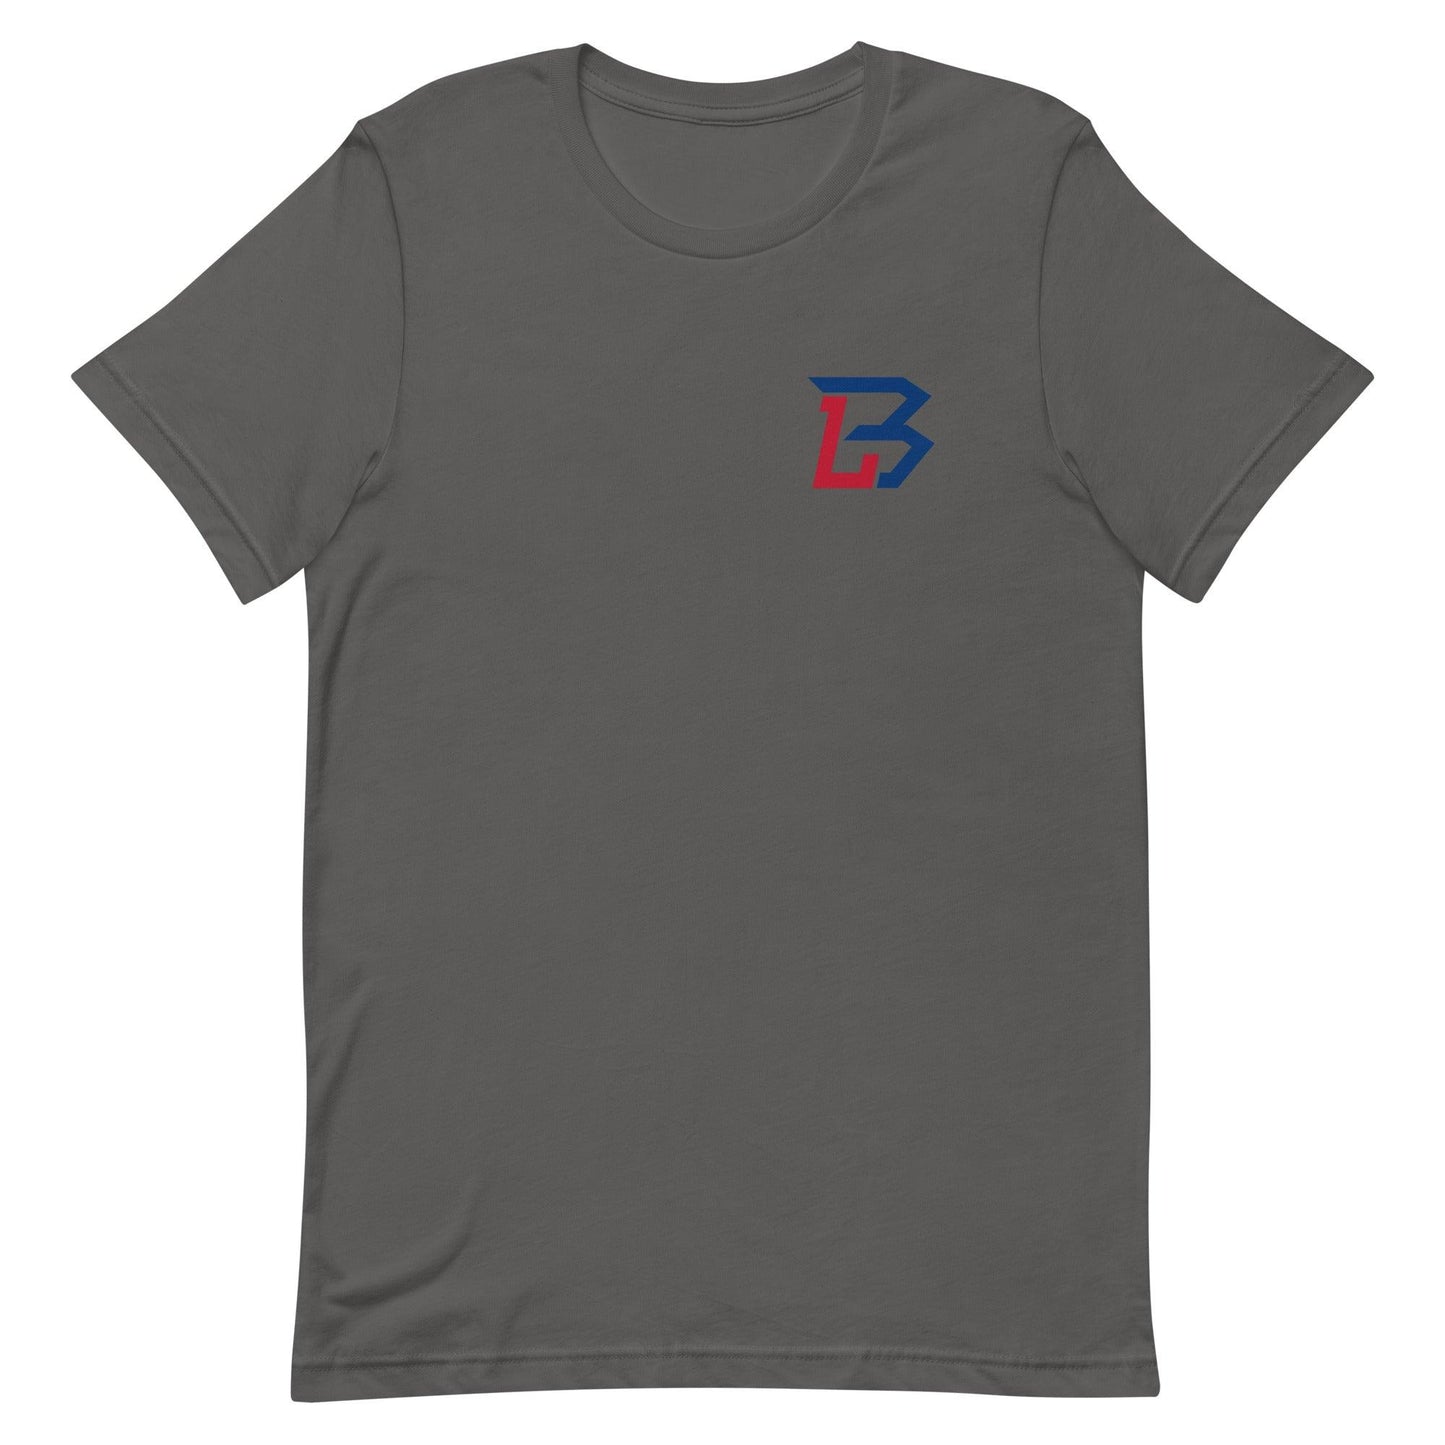 Brendon Little "Essential" t-shirt - Fan Arch